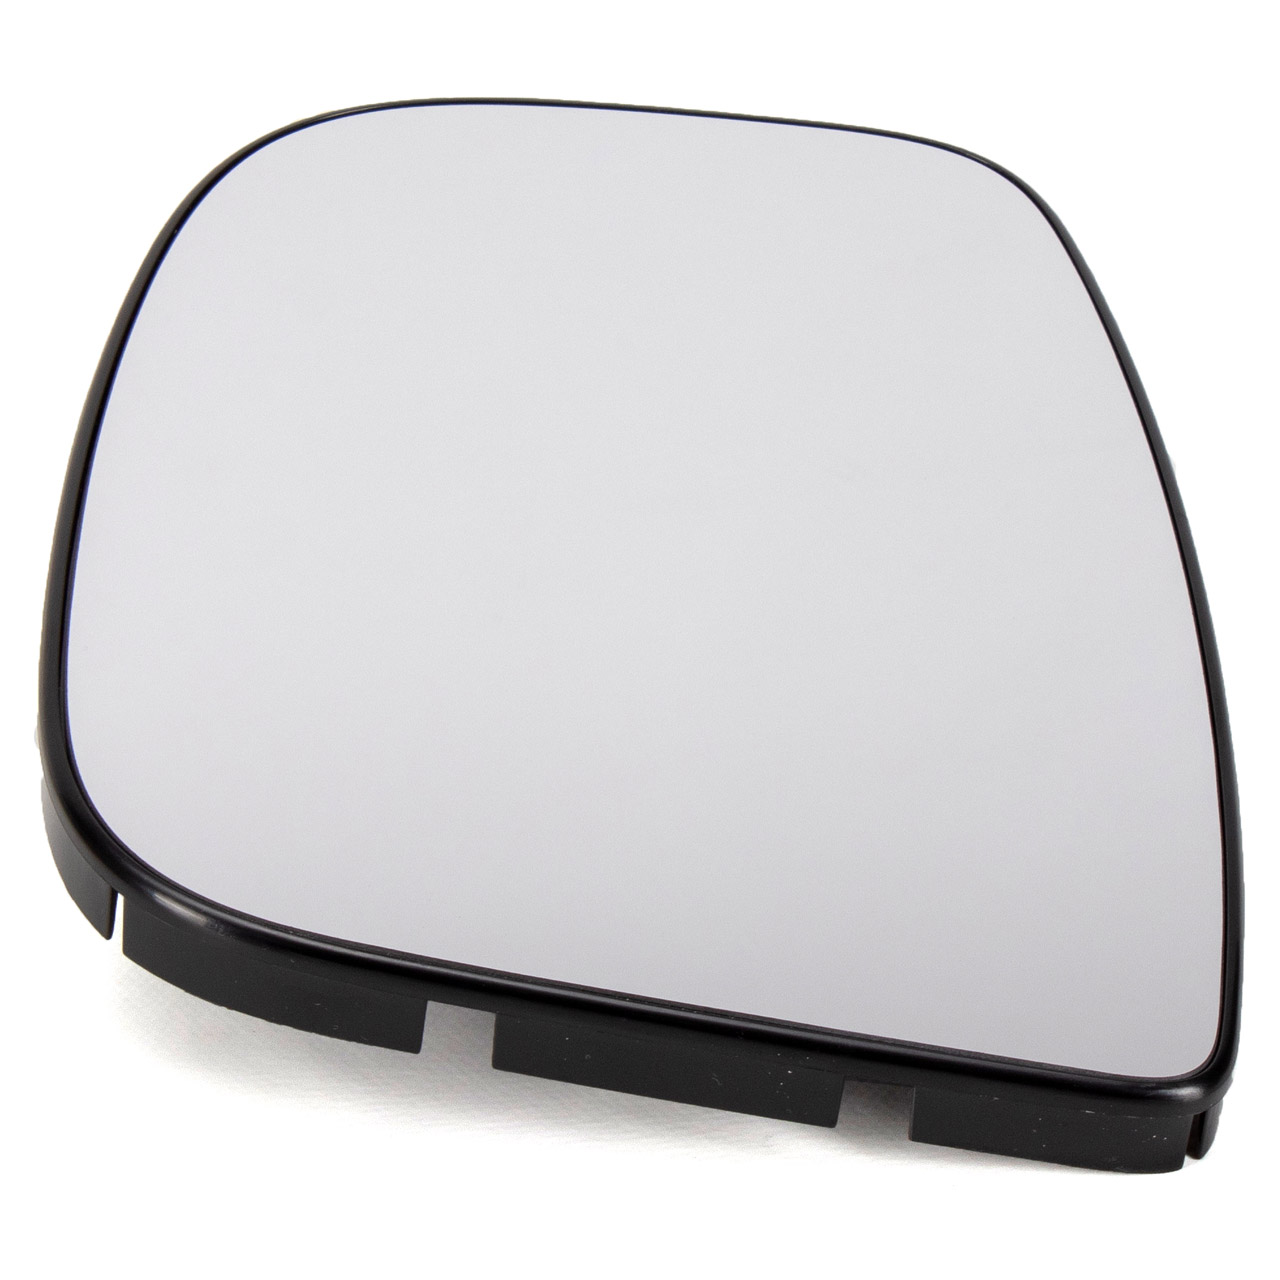 ORIGINAL PSA Außenspiegel Spiegelglas Berlingo Partner Facelift links  1679995680